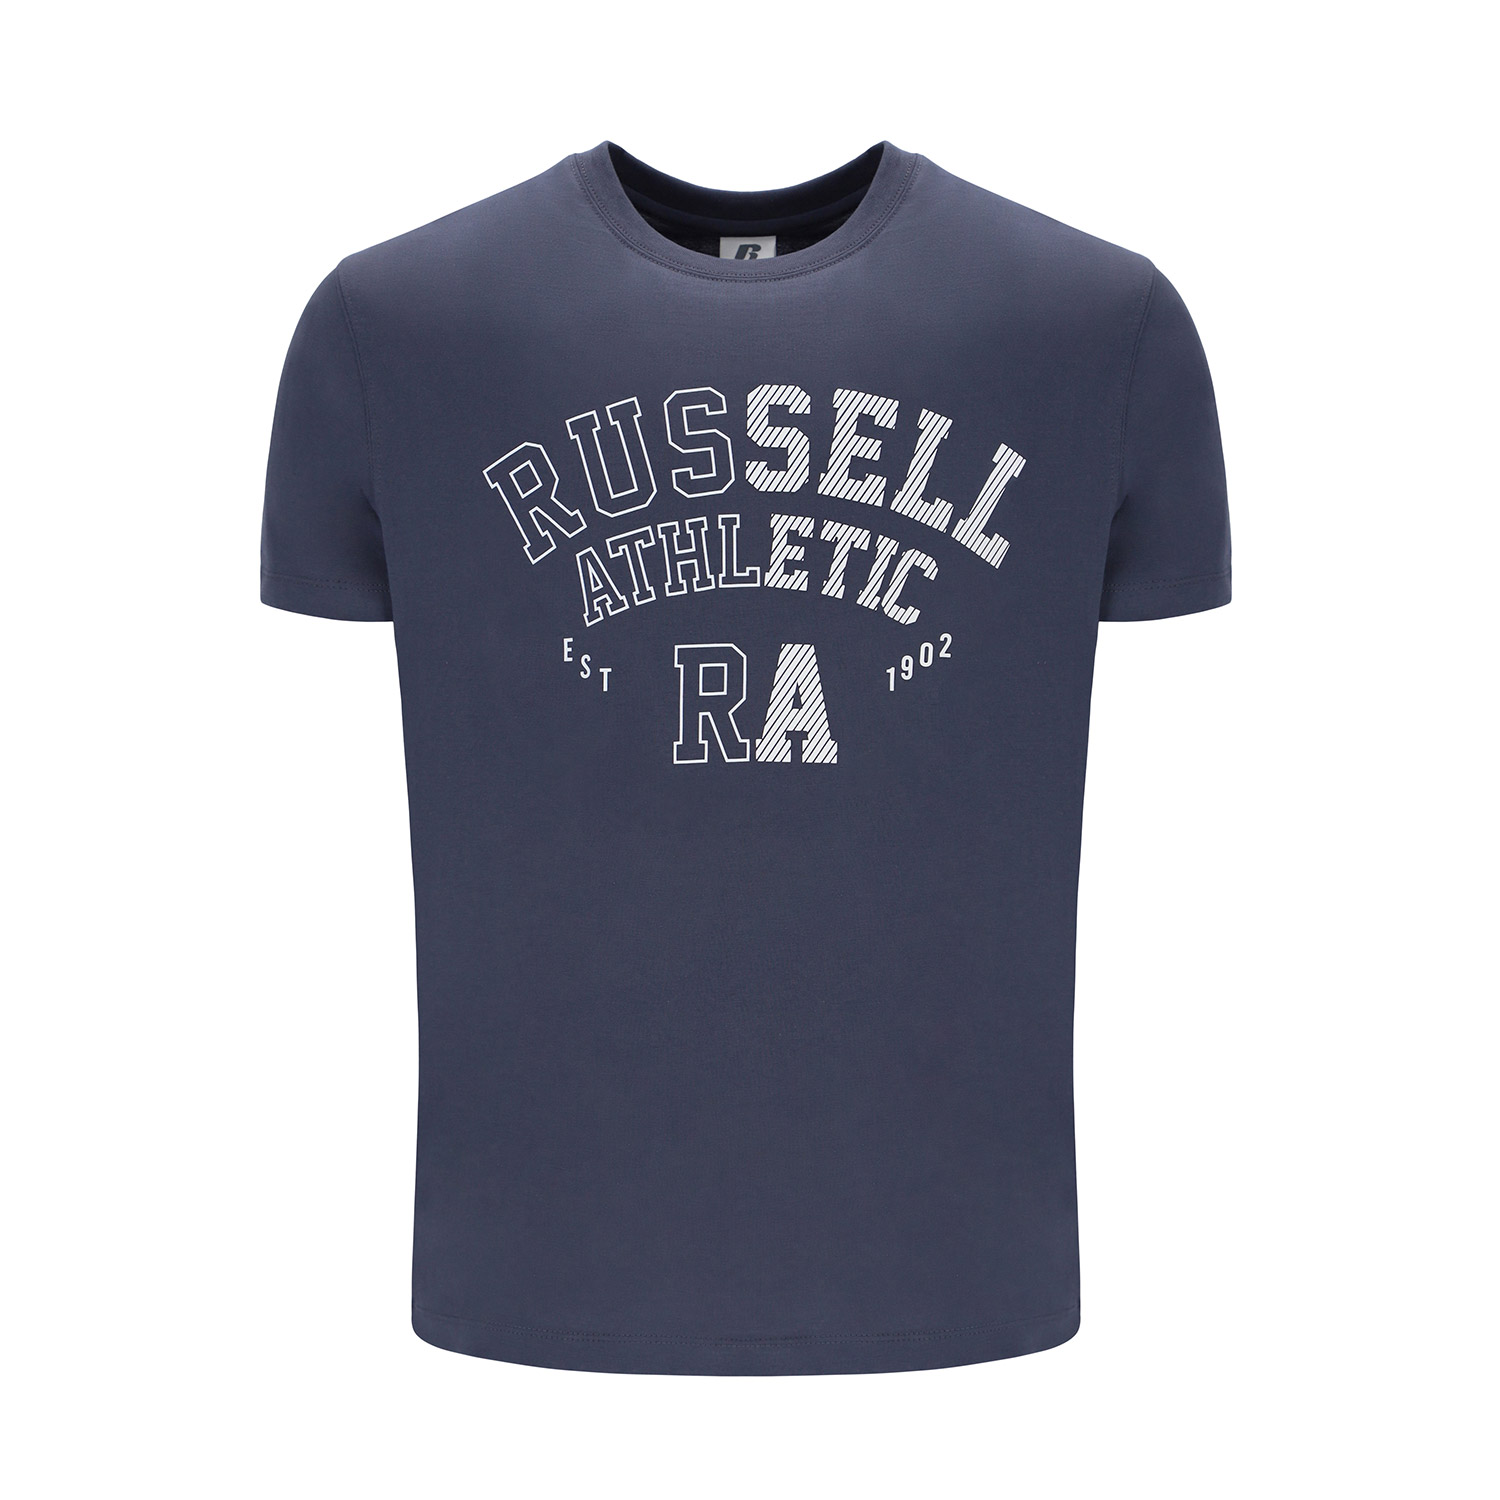 Russell M Blaine S/S Crewneck Tee Shirt (A4-007-1-155)